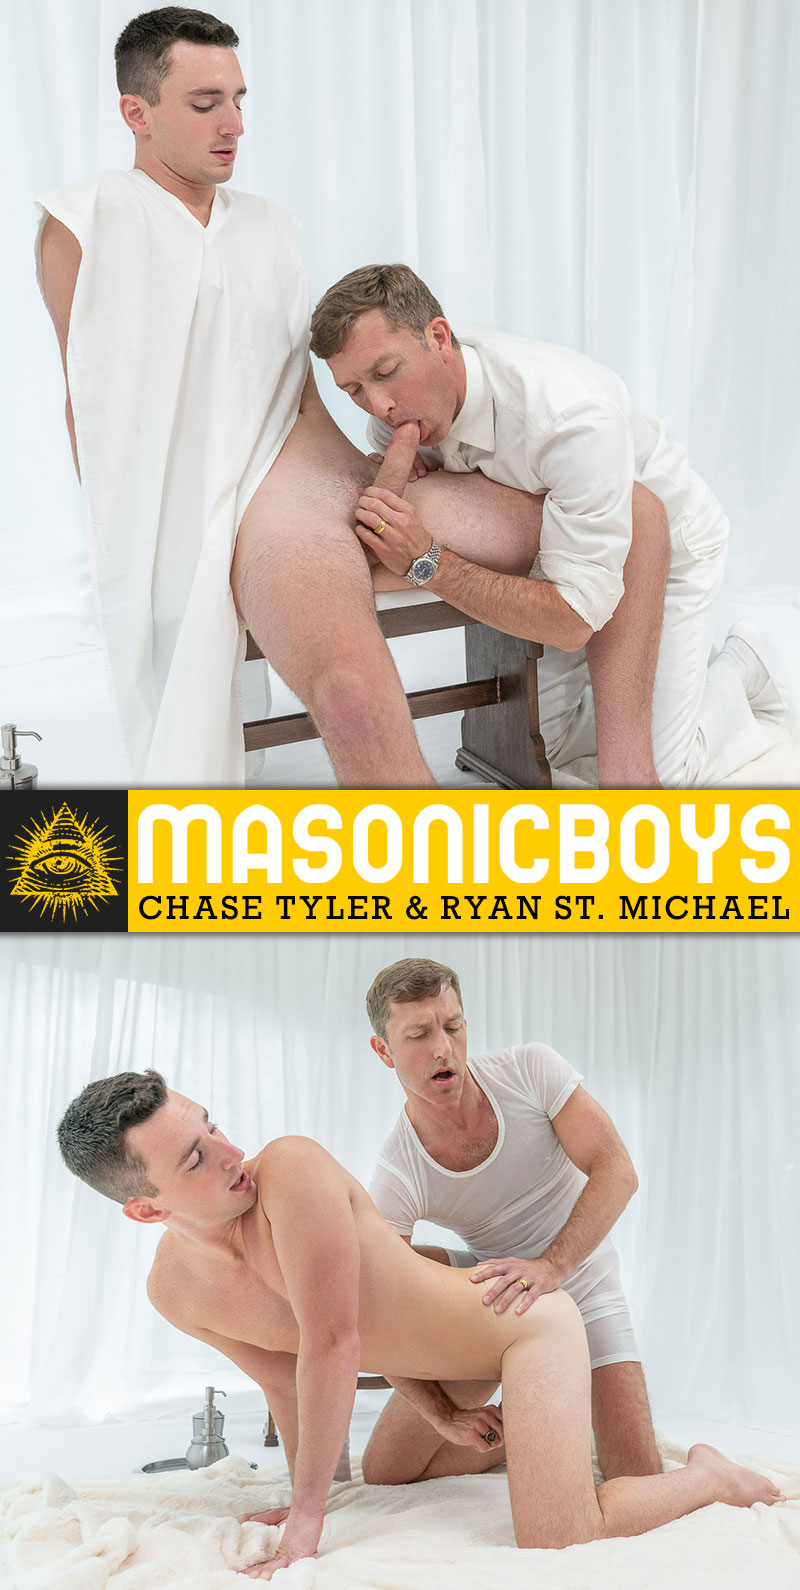 Chase Tyler Ryan St Michael MasonicBoys